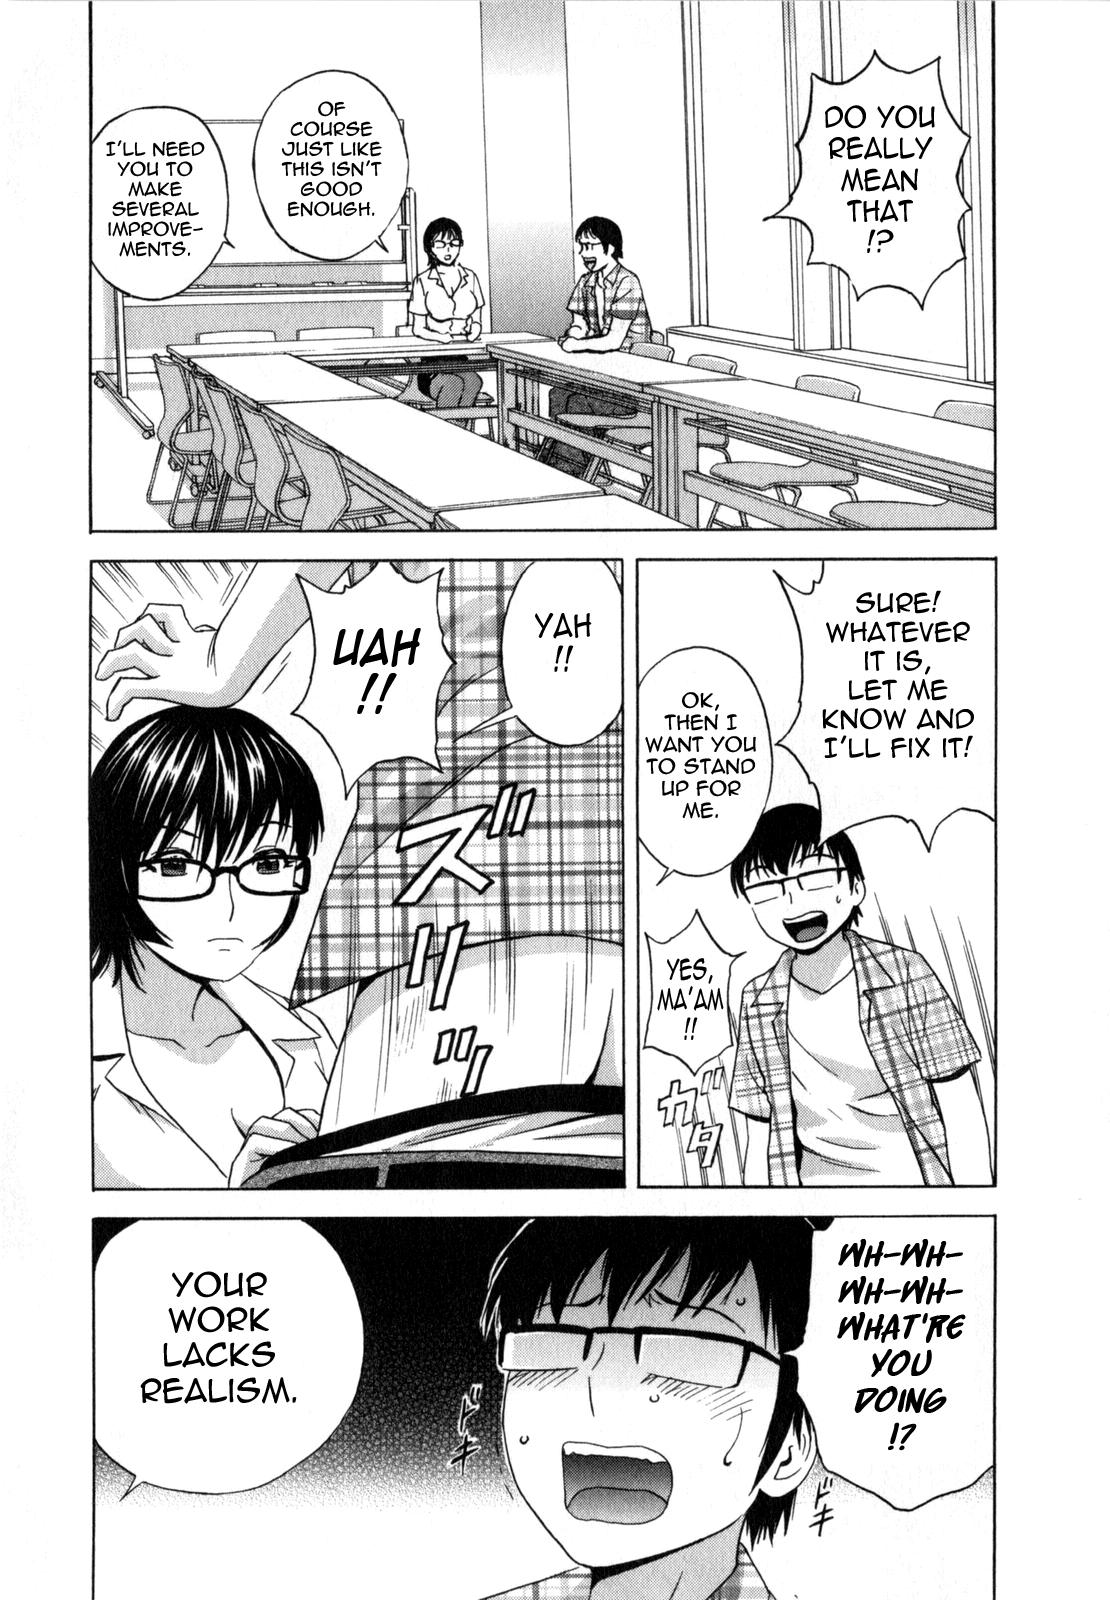 [Hidemaru] Life with Married Women Just Like a Manga 1 - Ch. 1-8 [English] {Tadanohito} 110